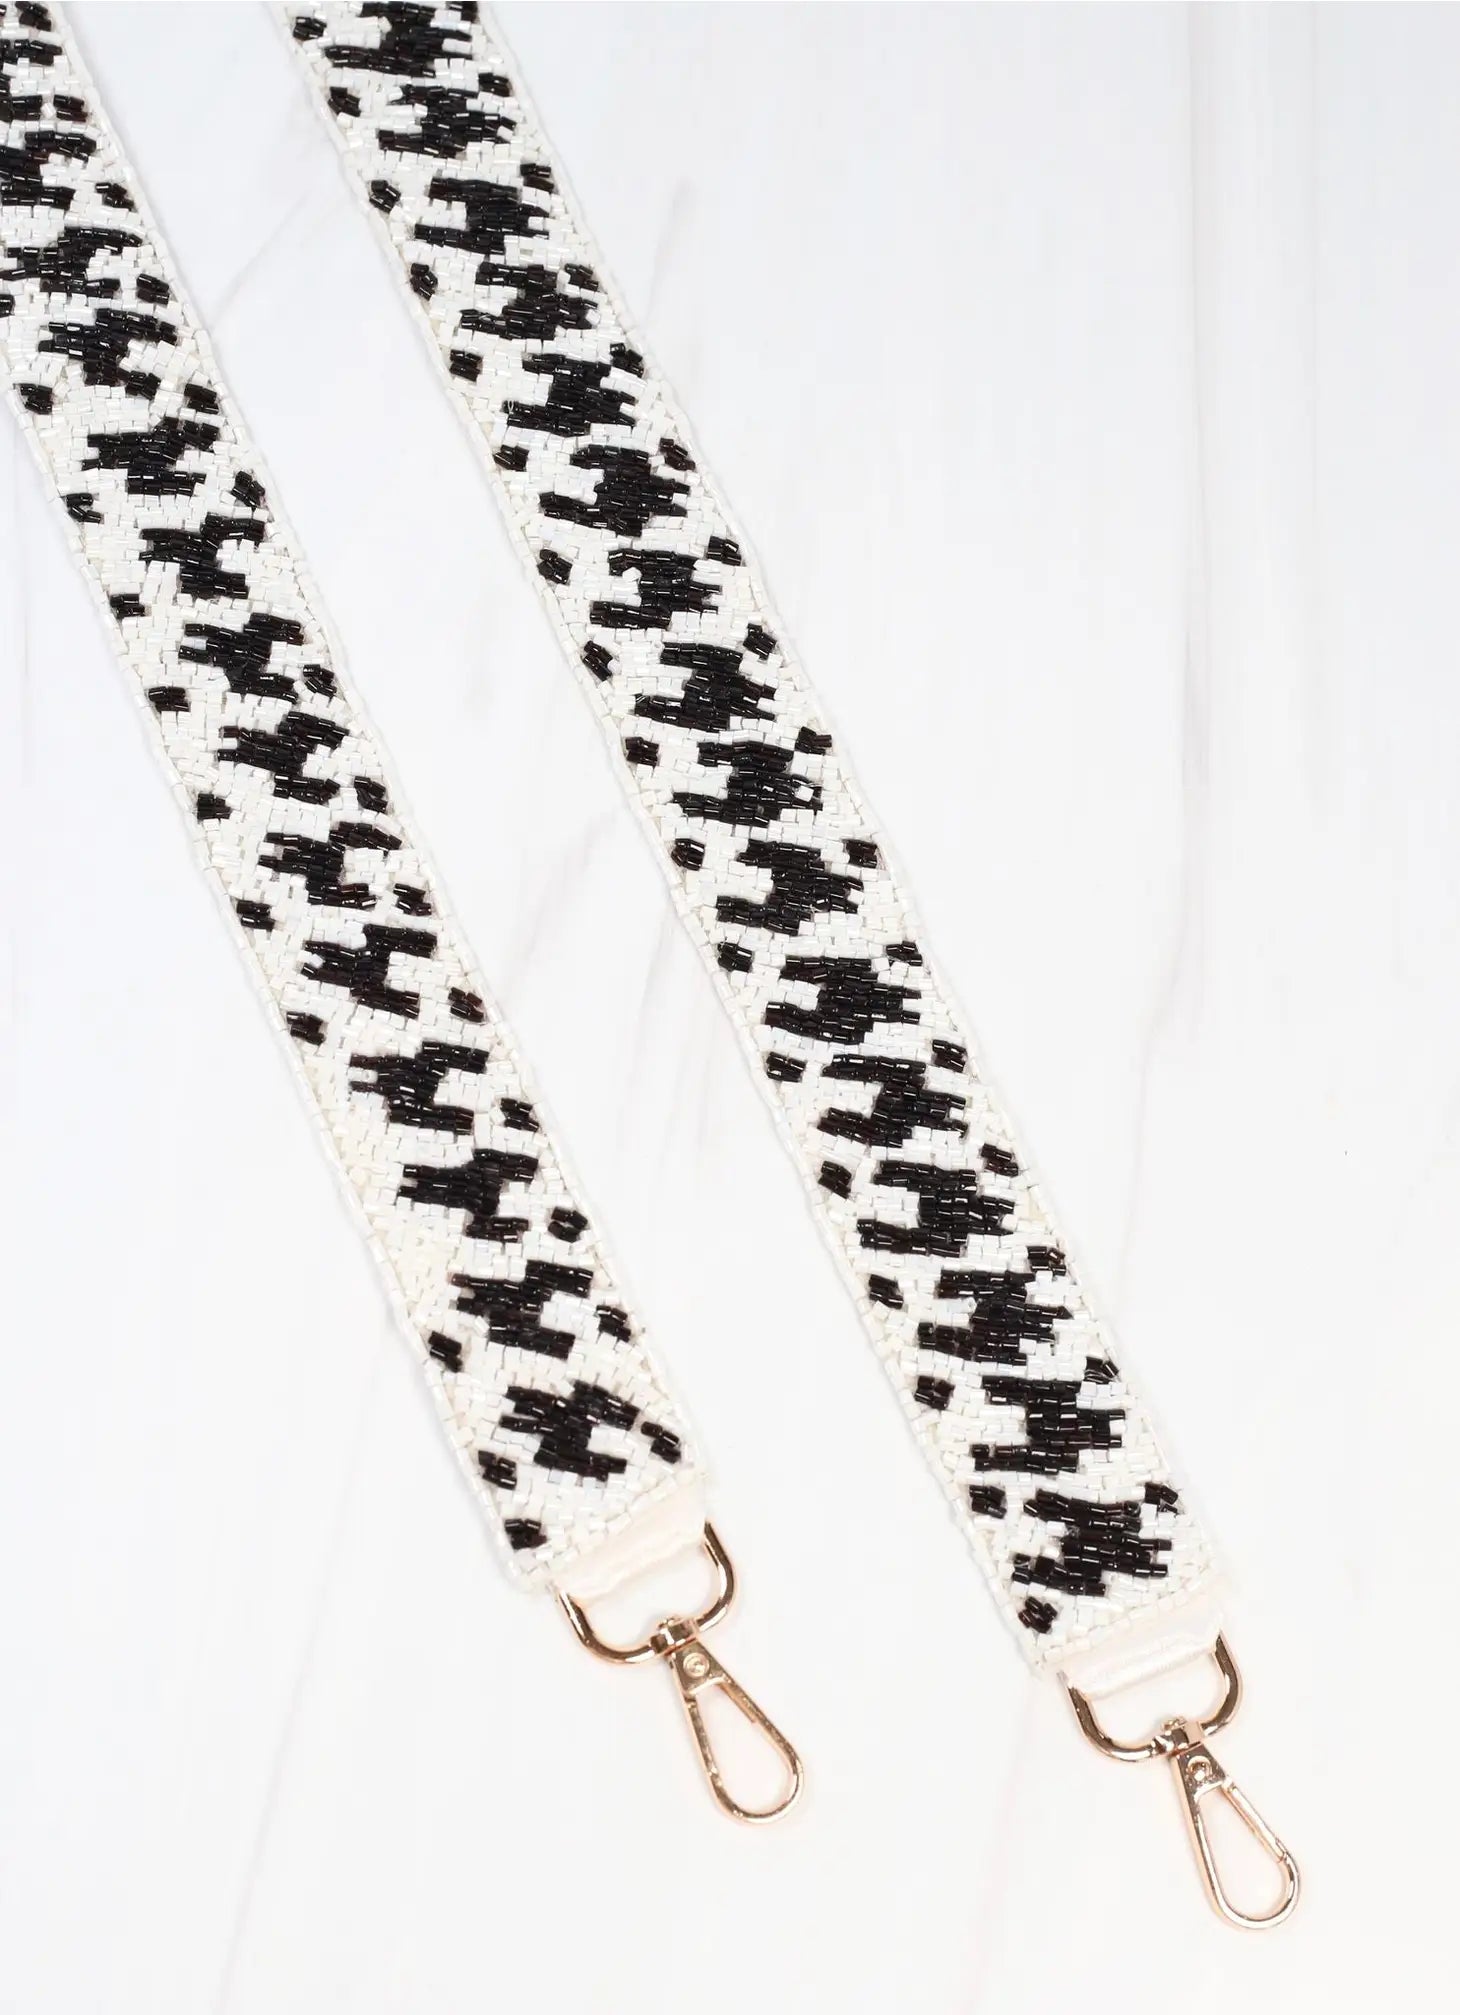 Estelle Metallic Beads Bag